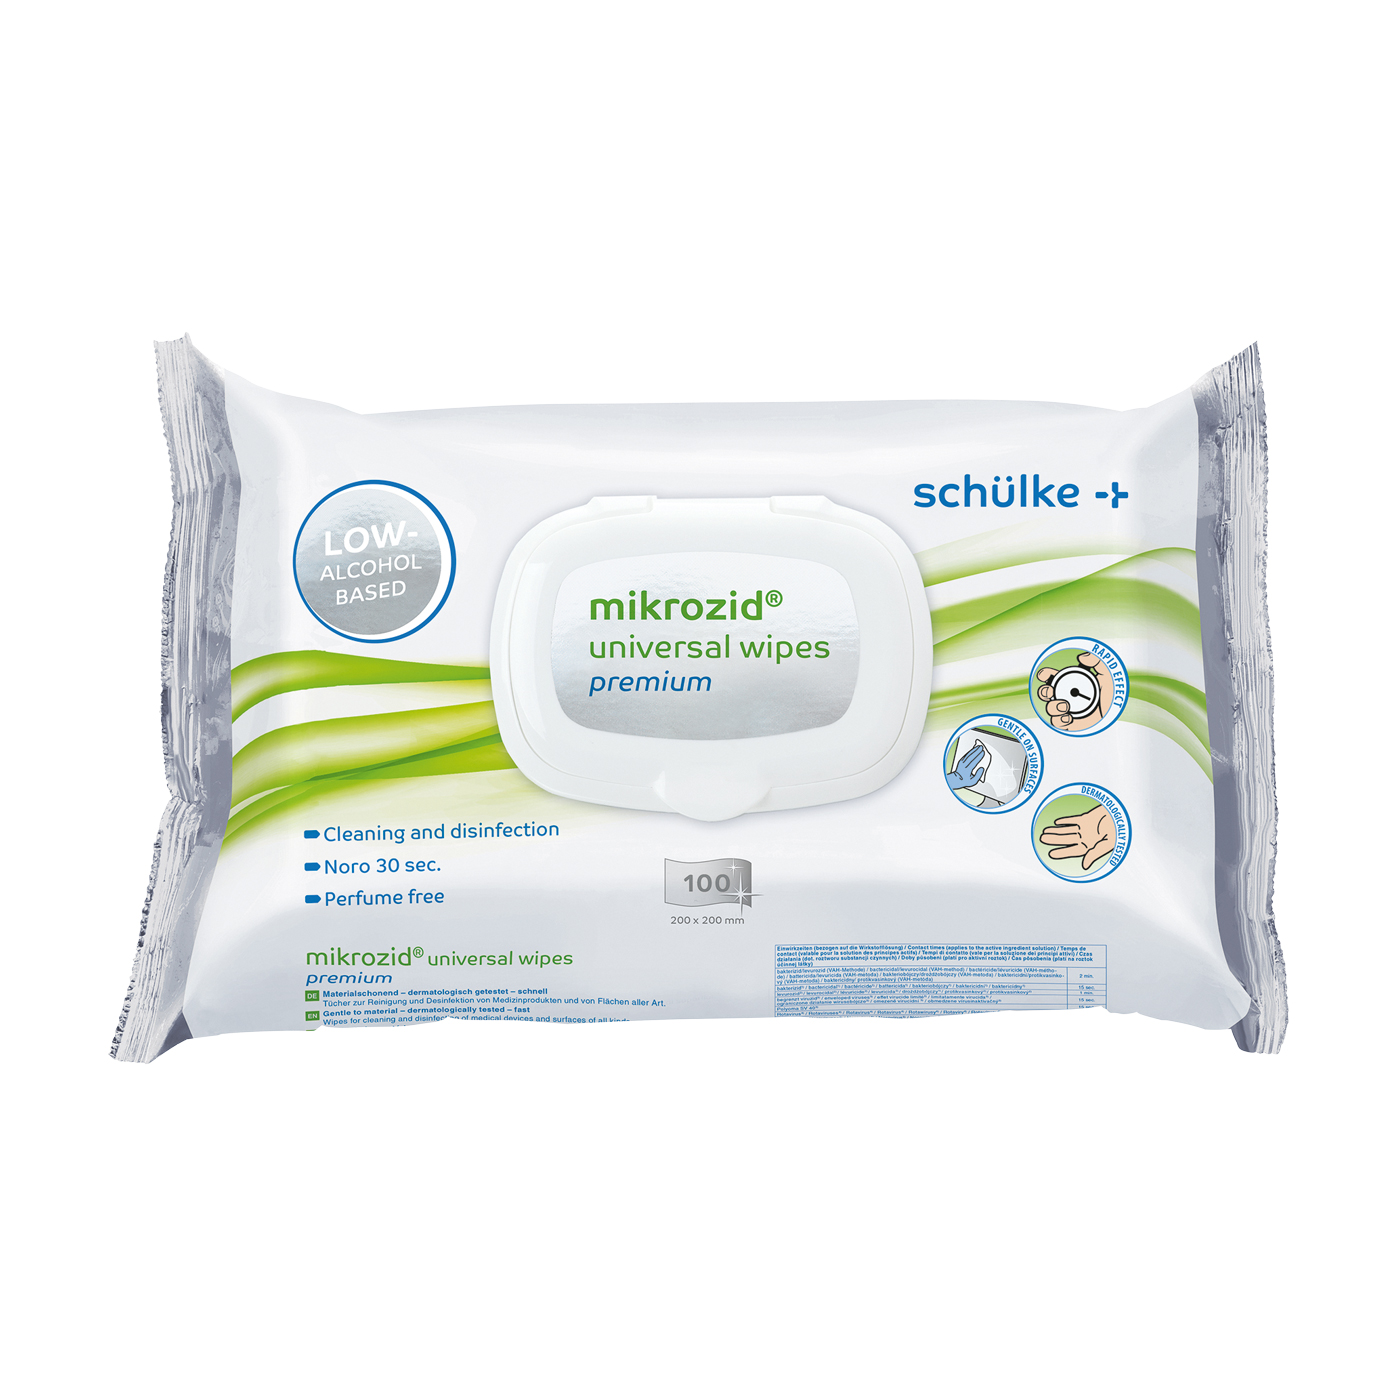 Schülke & Mayr mikrozid universal wipes premium Desinfektionstücher - 1 Pack